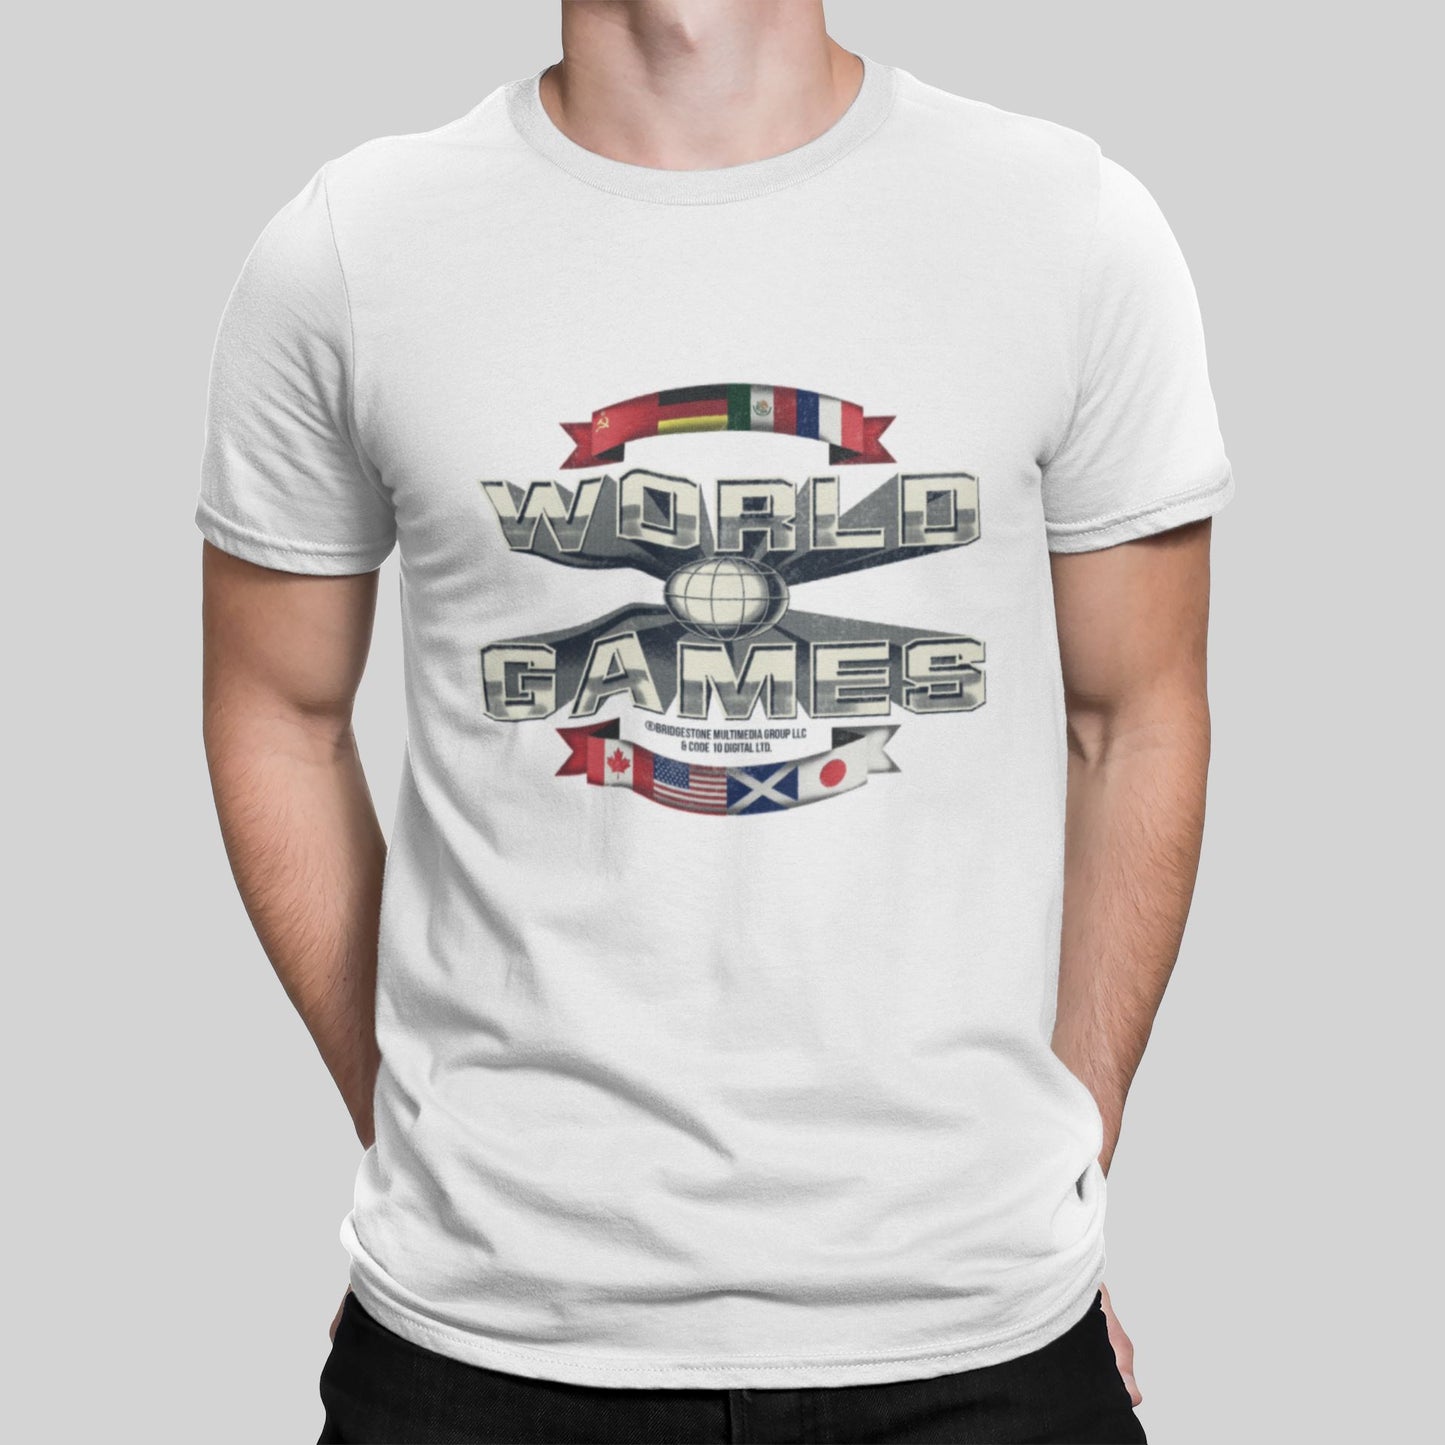 World Games Retro Gaming T-Shirt T-Shirt Seven Squared Small 34-36" White 